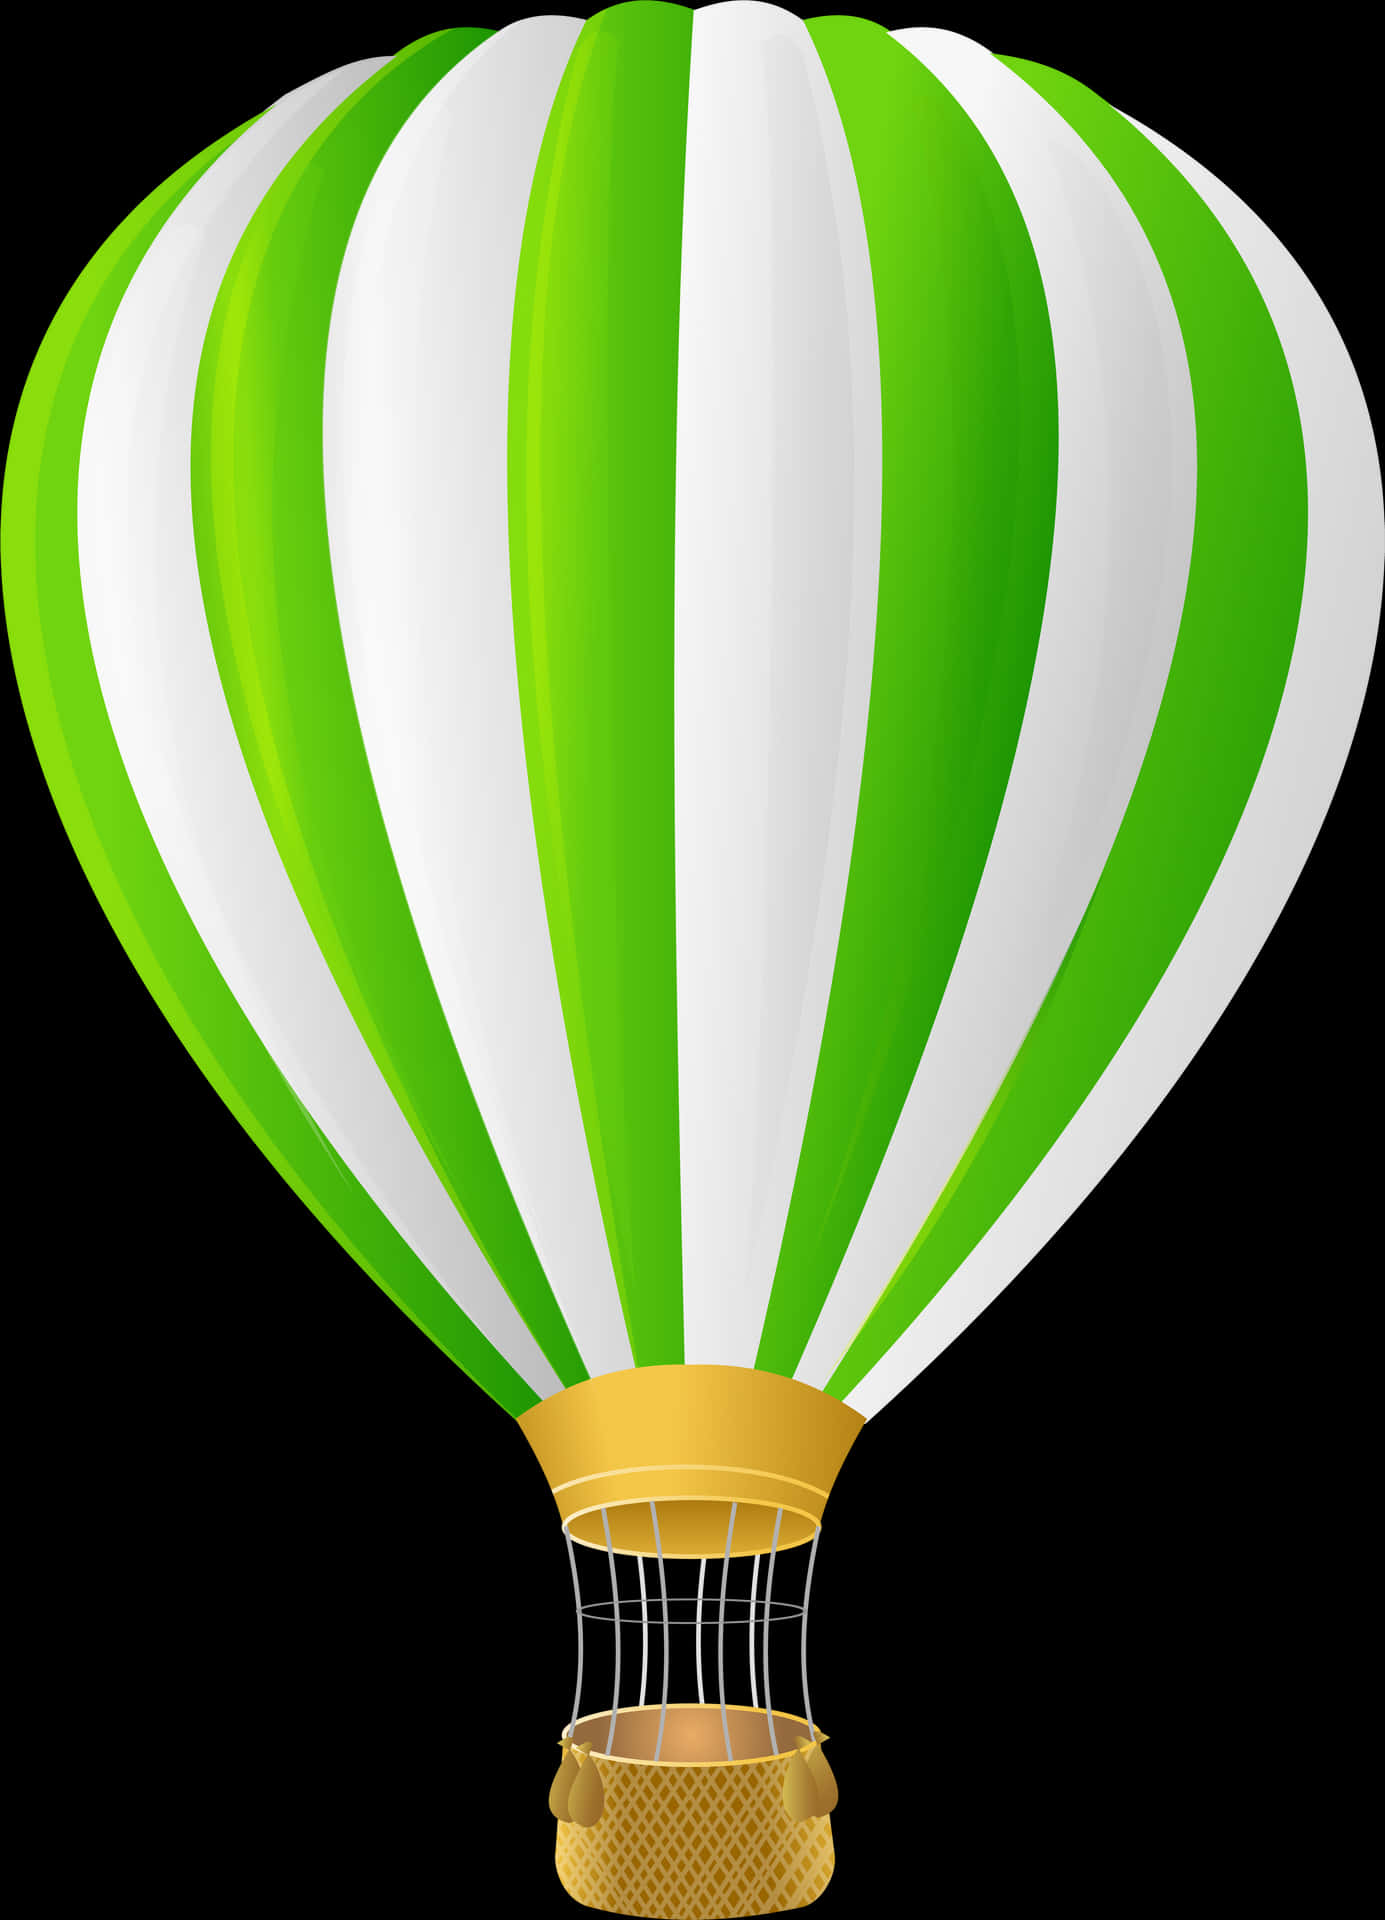 Greenand White Hot Air Balloon PNG